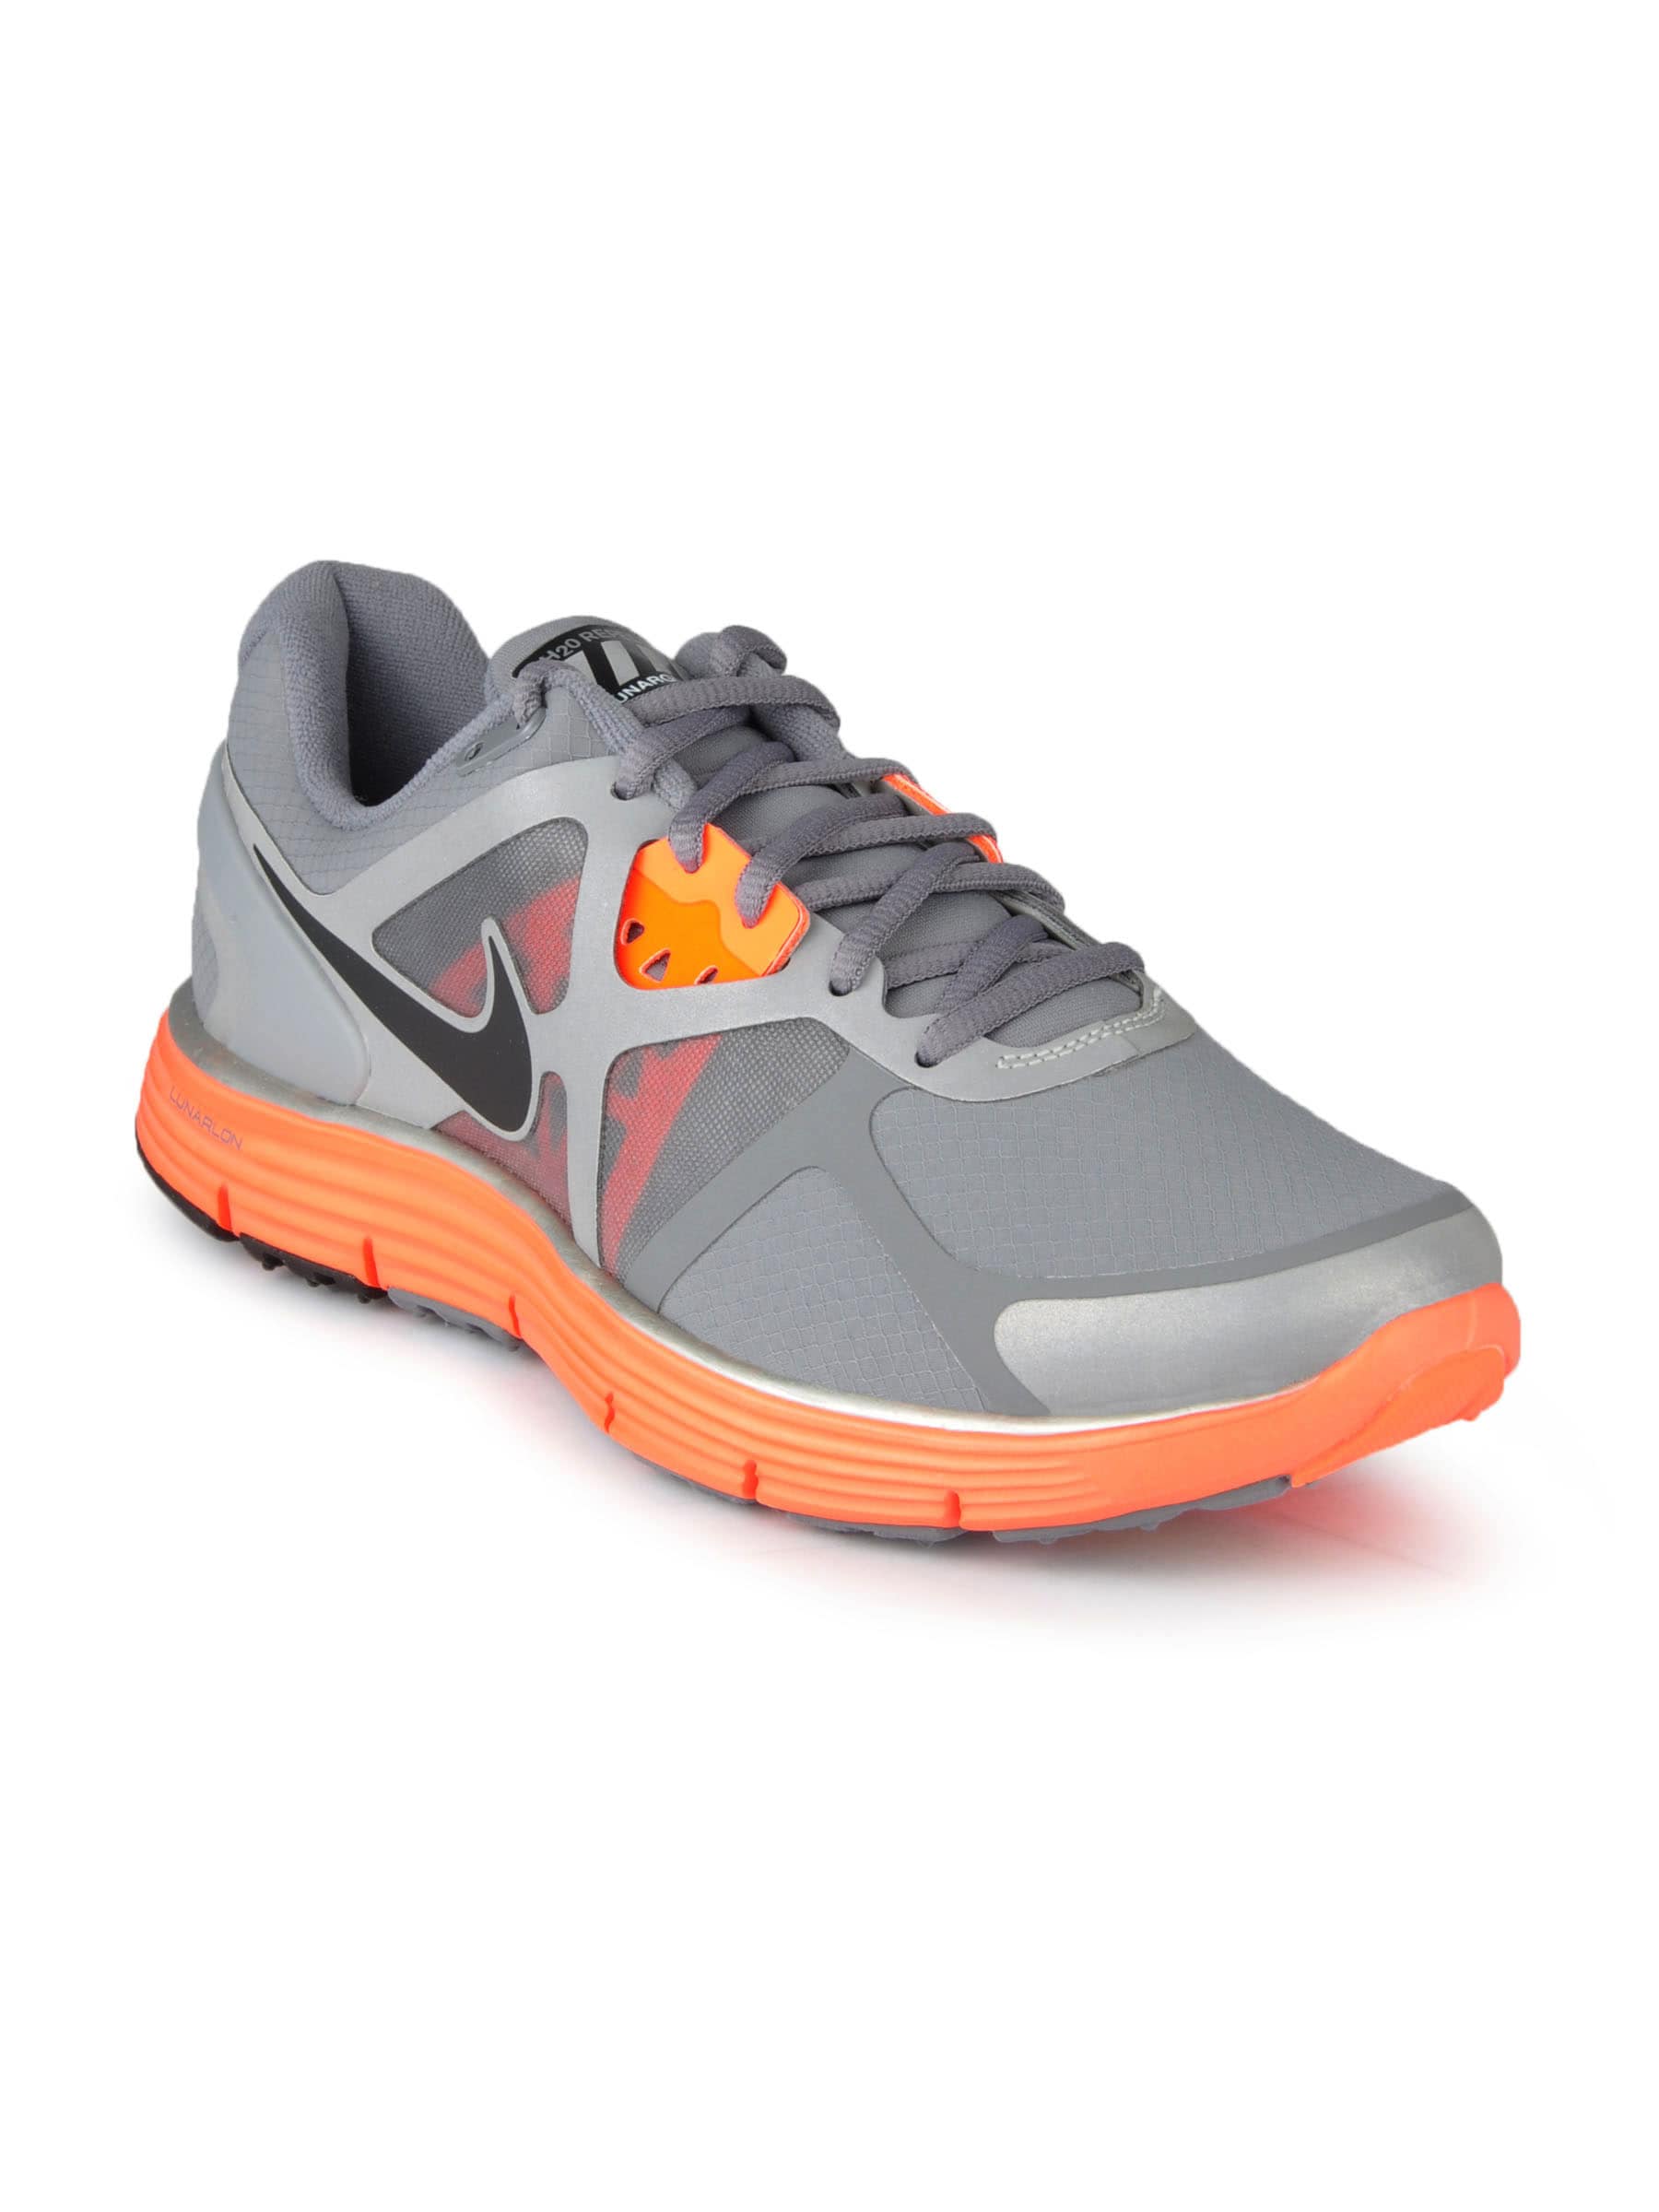 Nike Men Lunarglide + Shield Grey Sports Shoes